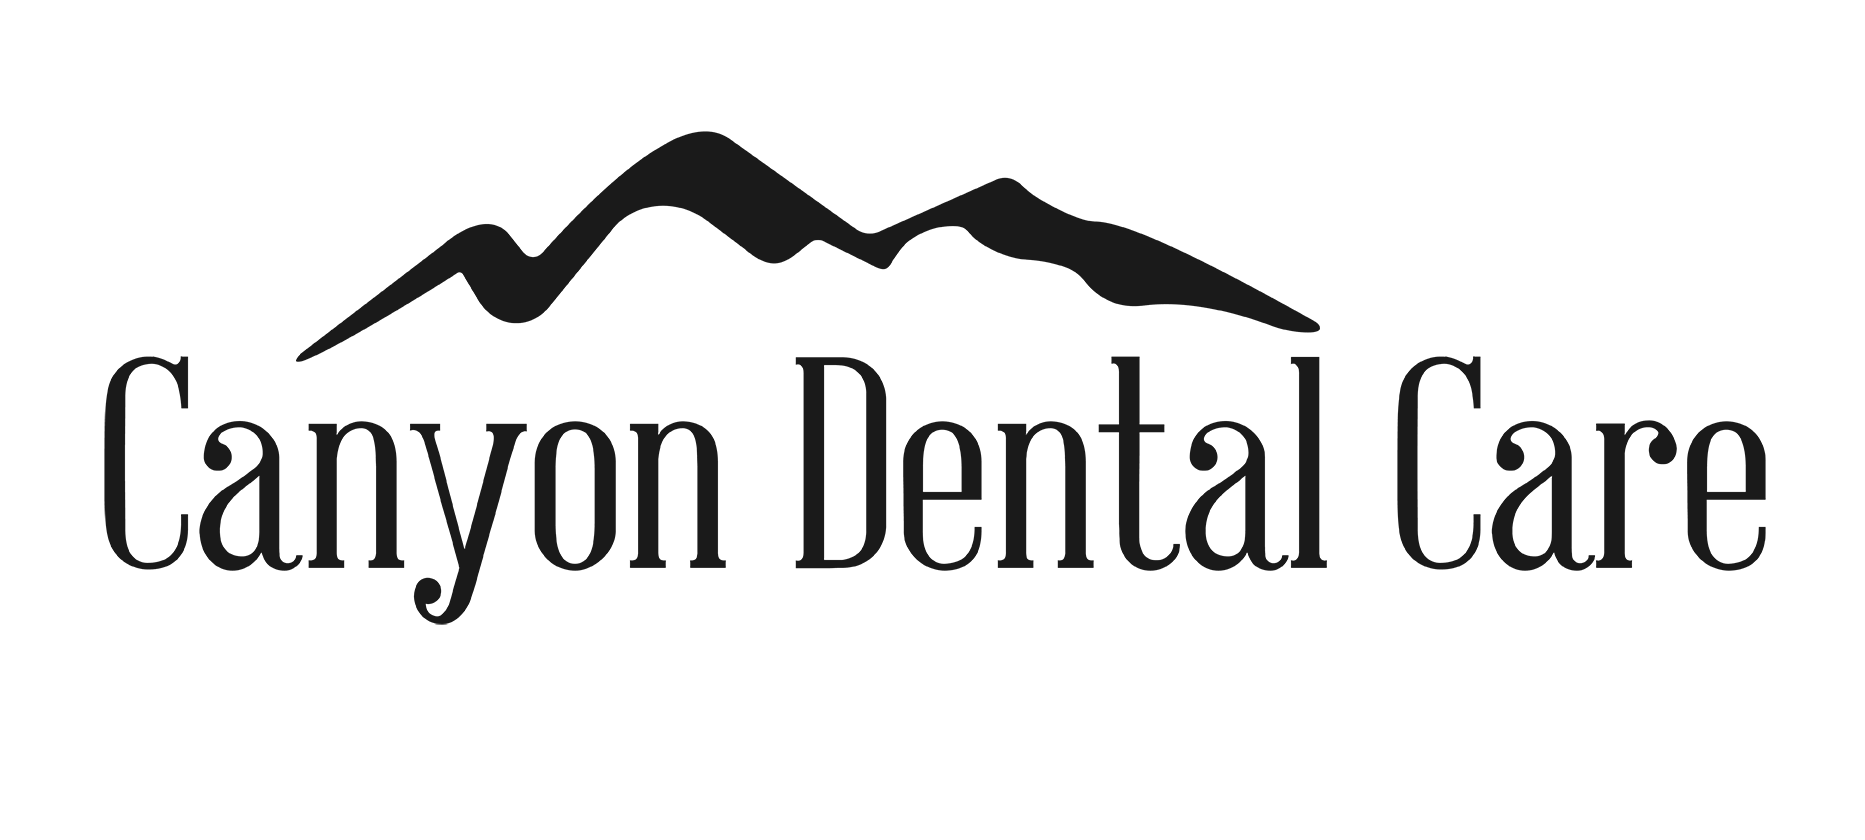 Canyon Dental Care - Smithfield Utah